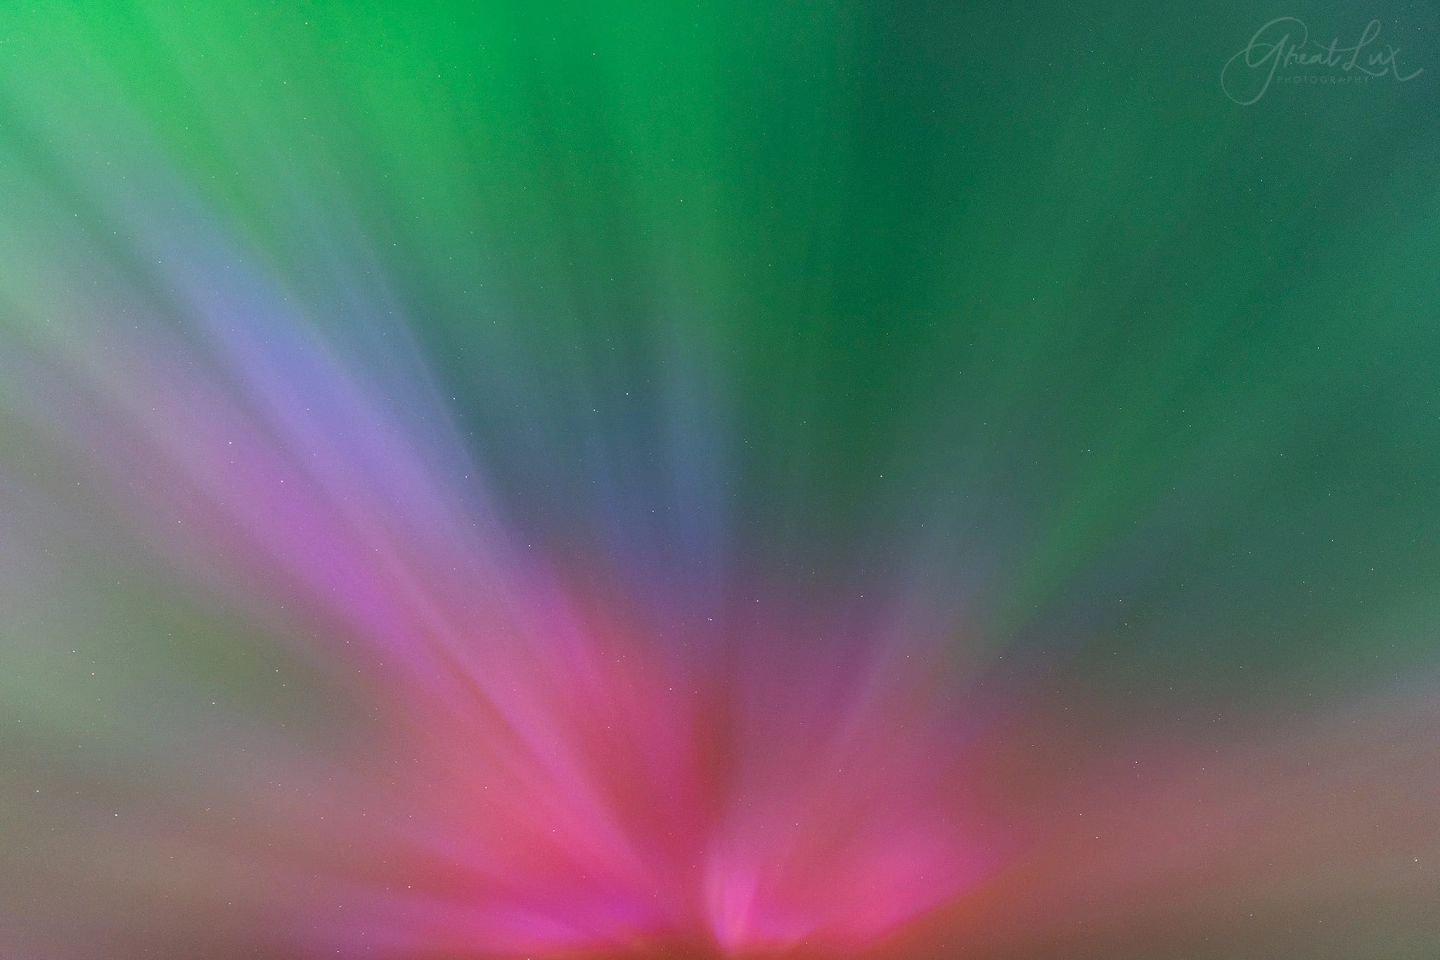 Watermelon Sugar High

#watermelonsugarhigh #auroraborealis #northernlights #derbyshire #abstract #solarstorm #uk #artofnature #sonyalpha #vanguardphotouk #jessopsmoment #appicoftheweek #dcwow #shotbyyou #reflectionsmag #lovegreatbritain #gloriousbri